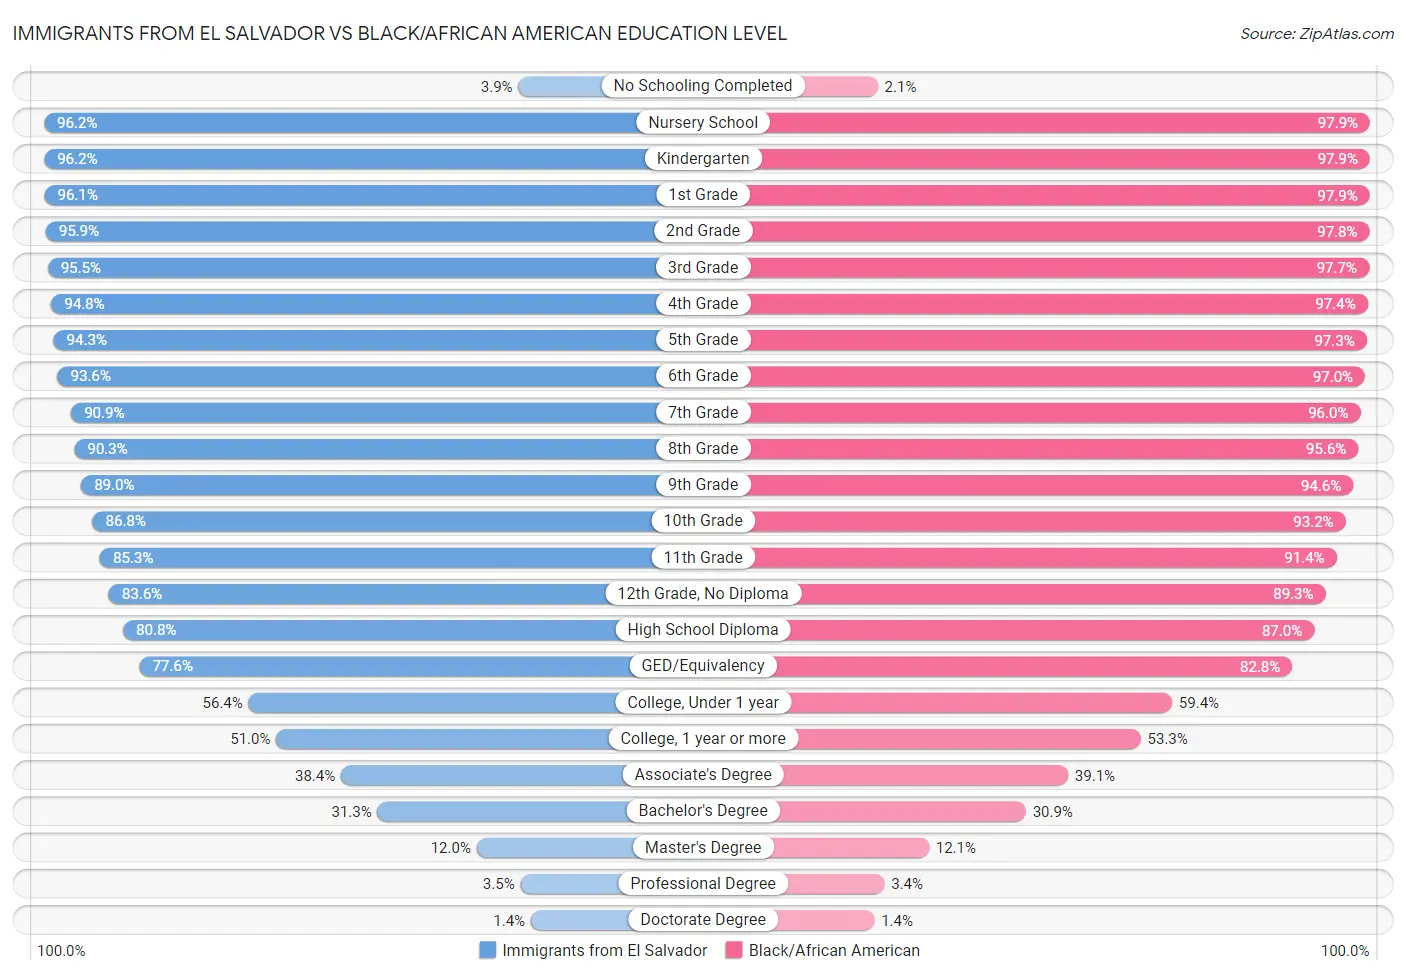 Immigrants from El Salvador vs Black/African American Education Level